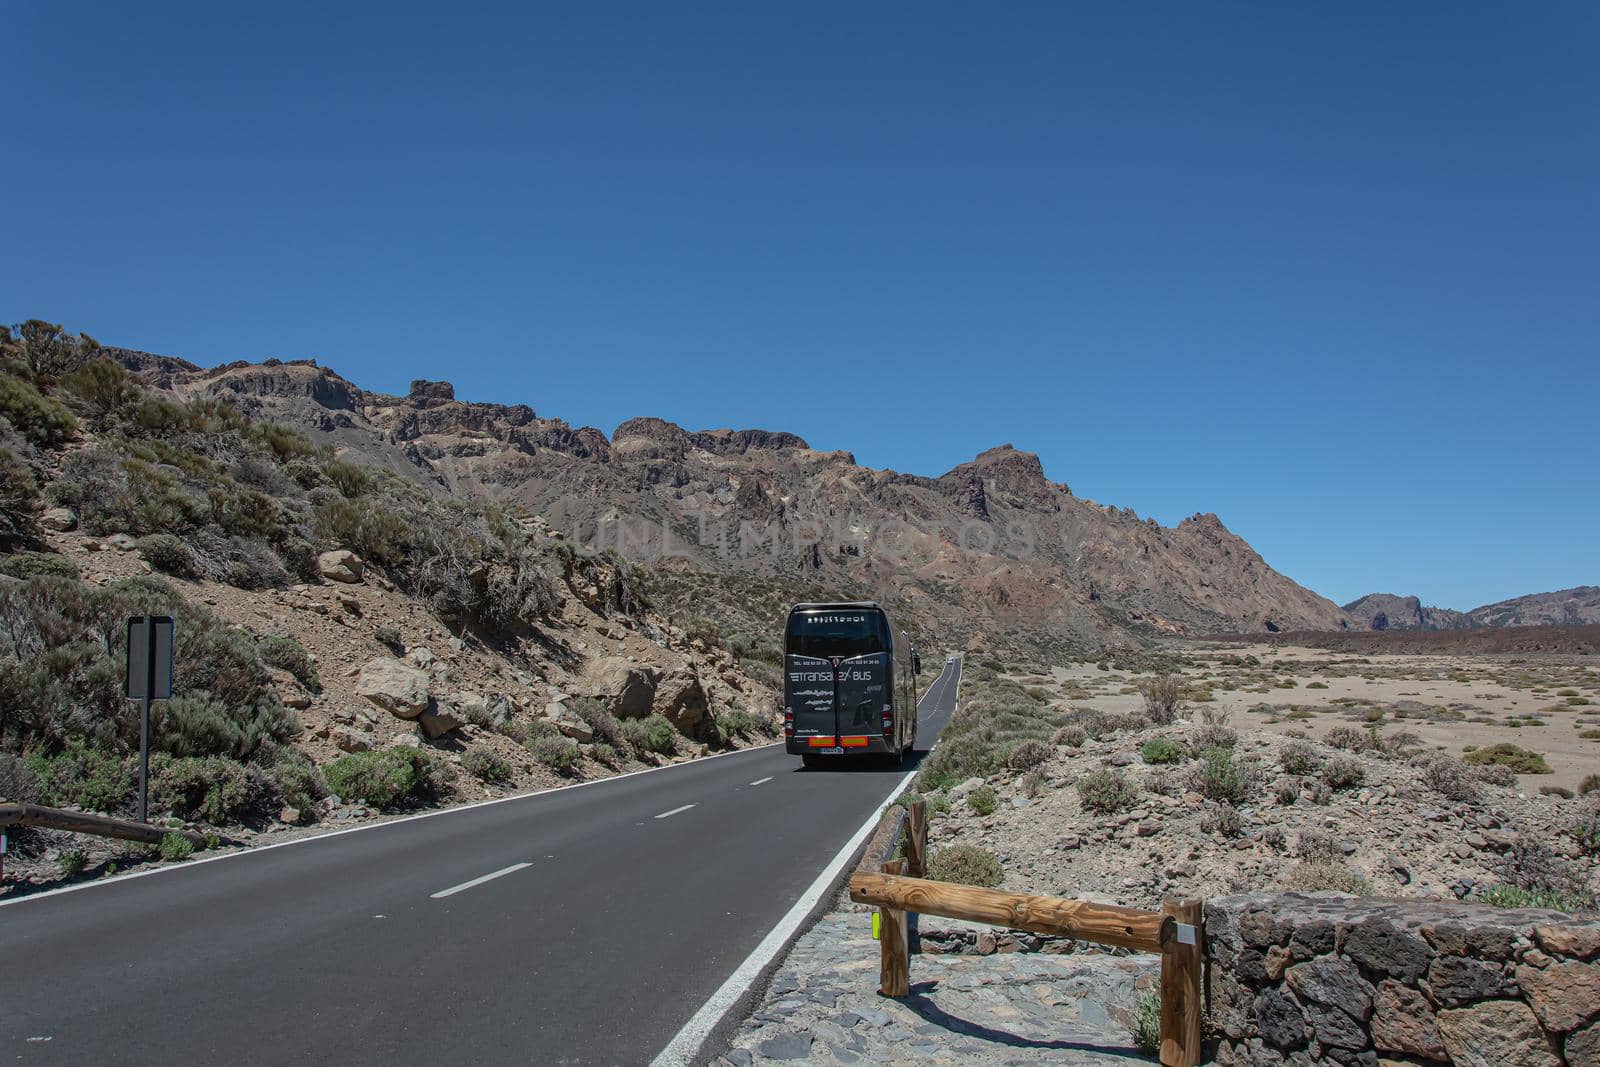 Tenerife island, Spain - 05/10/2018: Tourist bus rides moving on a mountain road